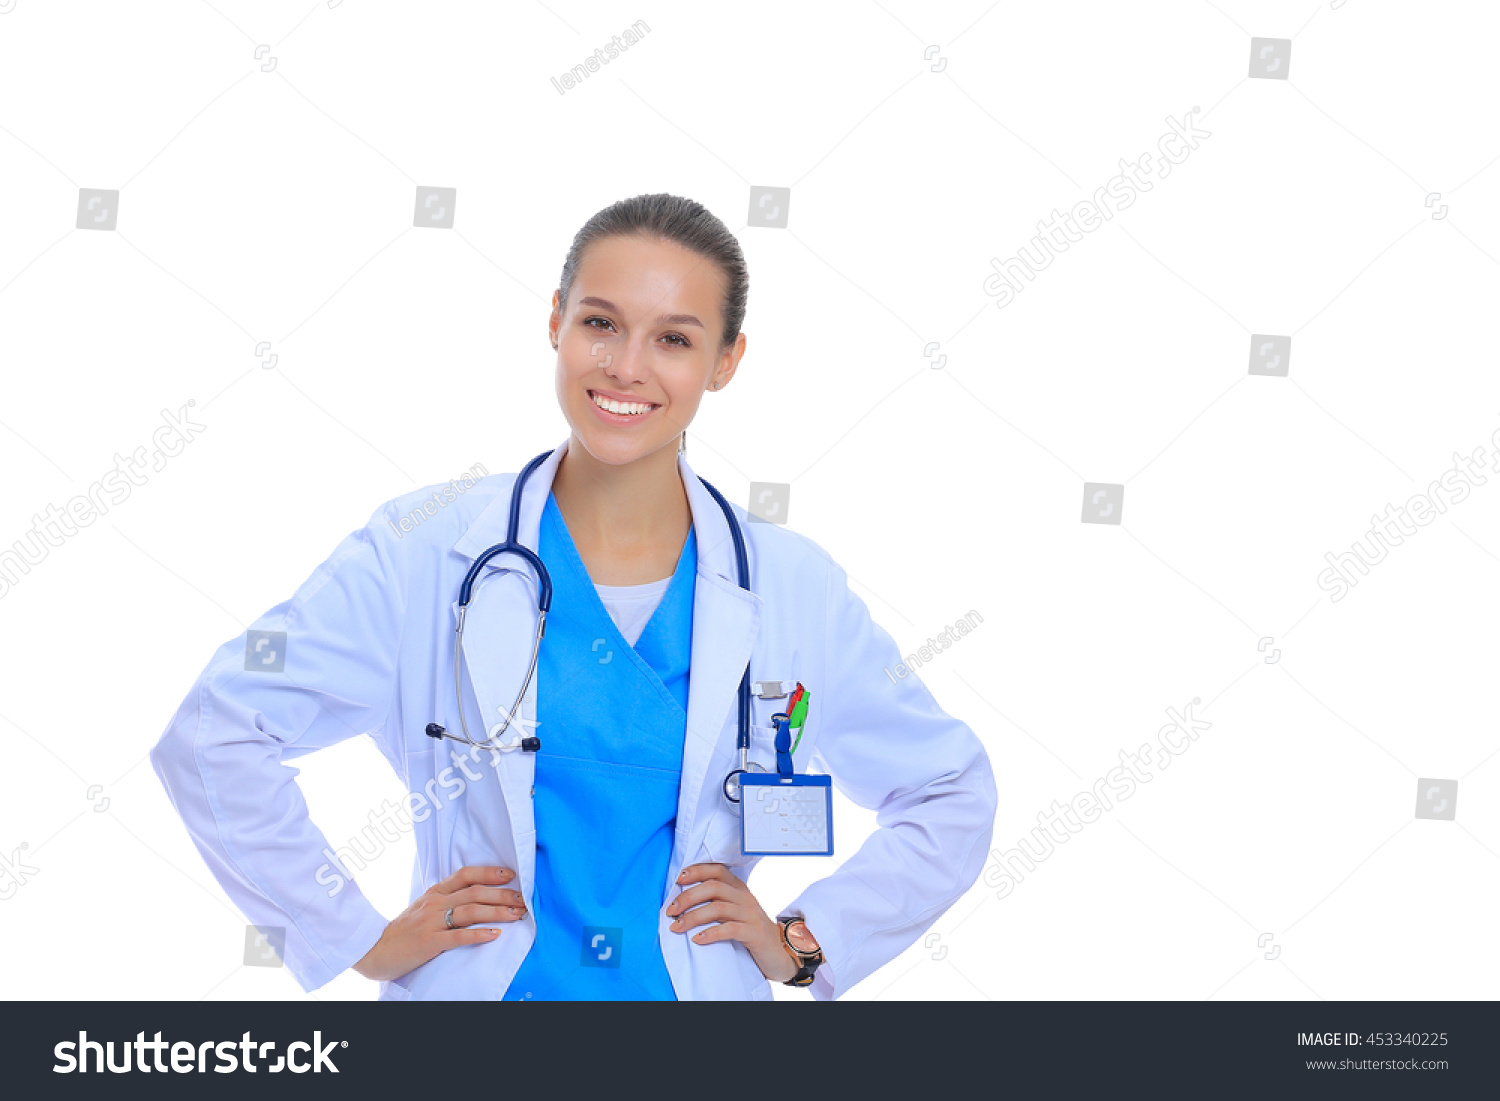 Beautiful caucasian nurse on white background. #453340225